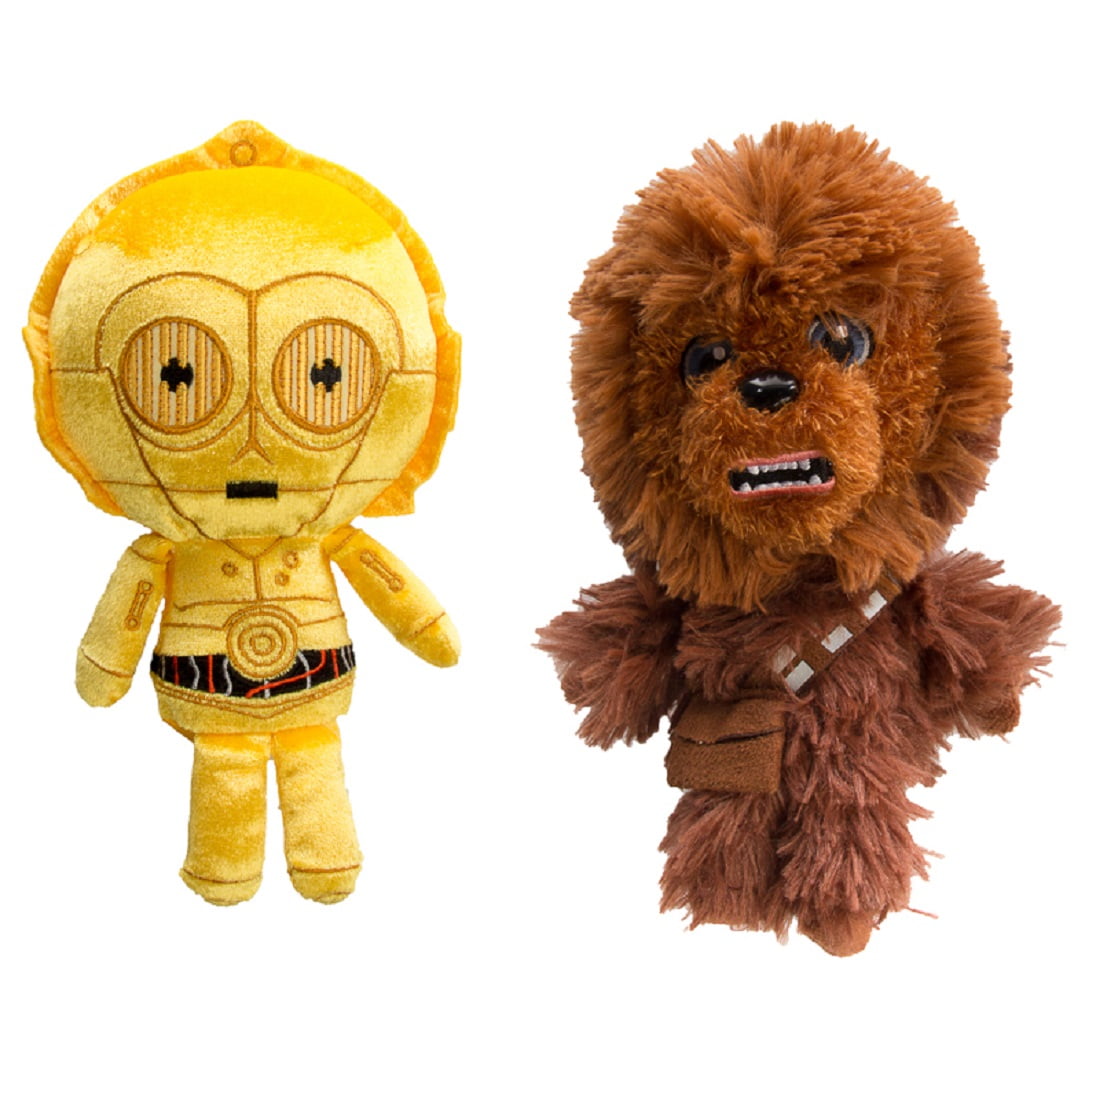 teddy bear characters star wars